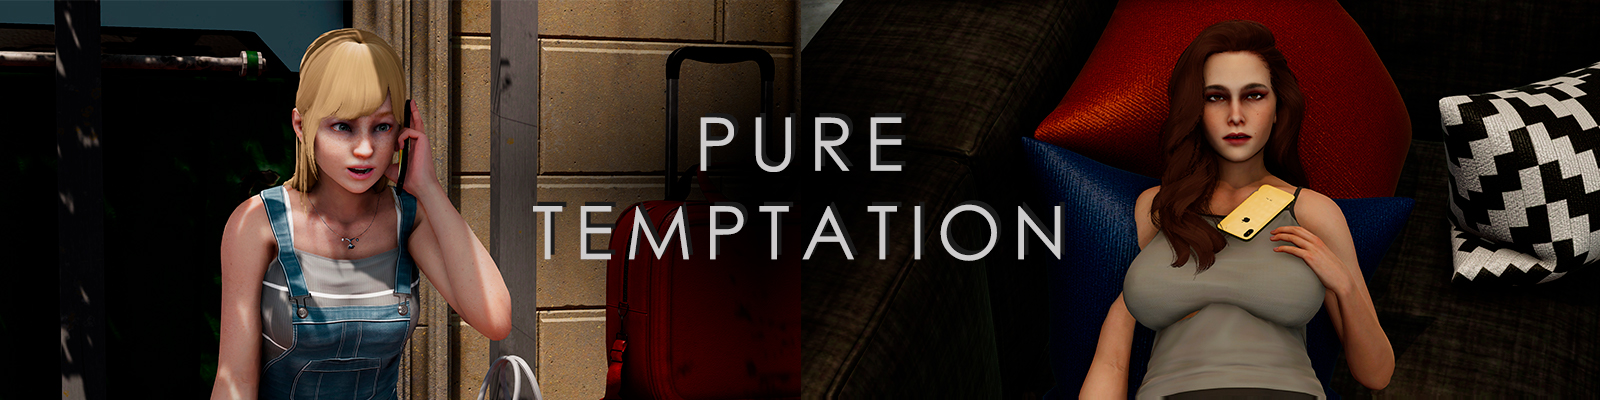 Pure Temptation poster